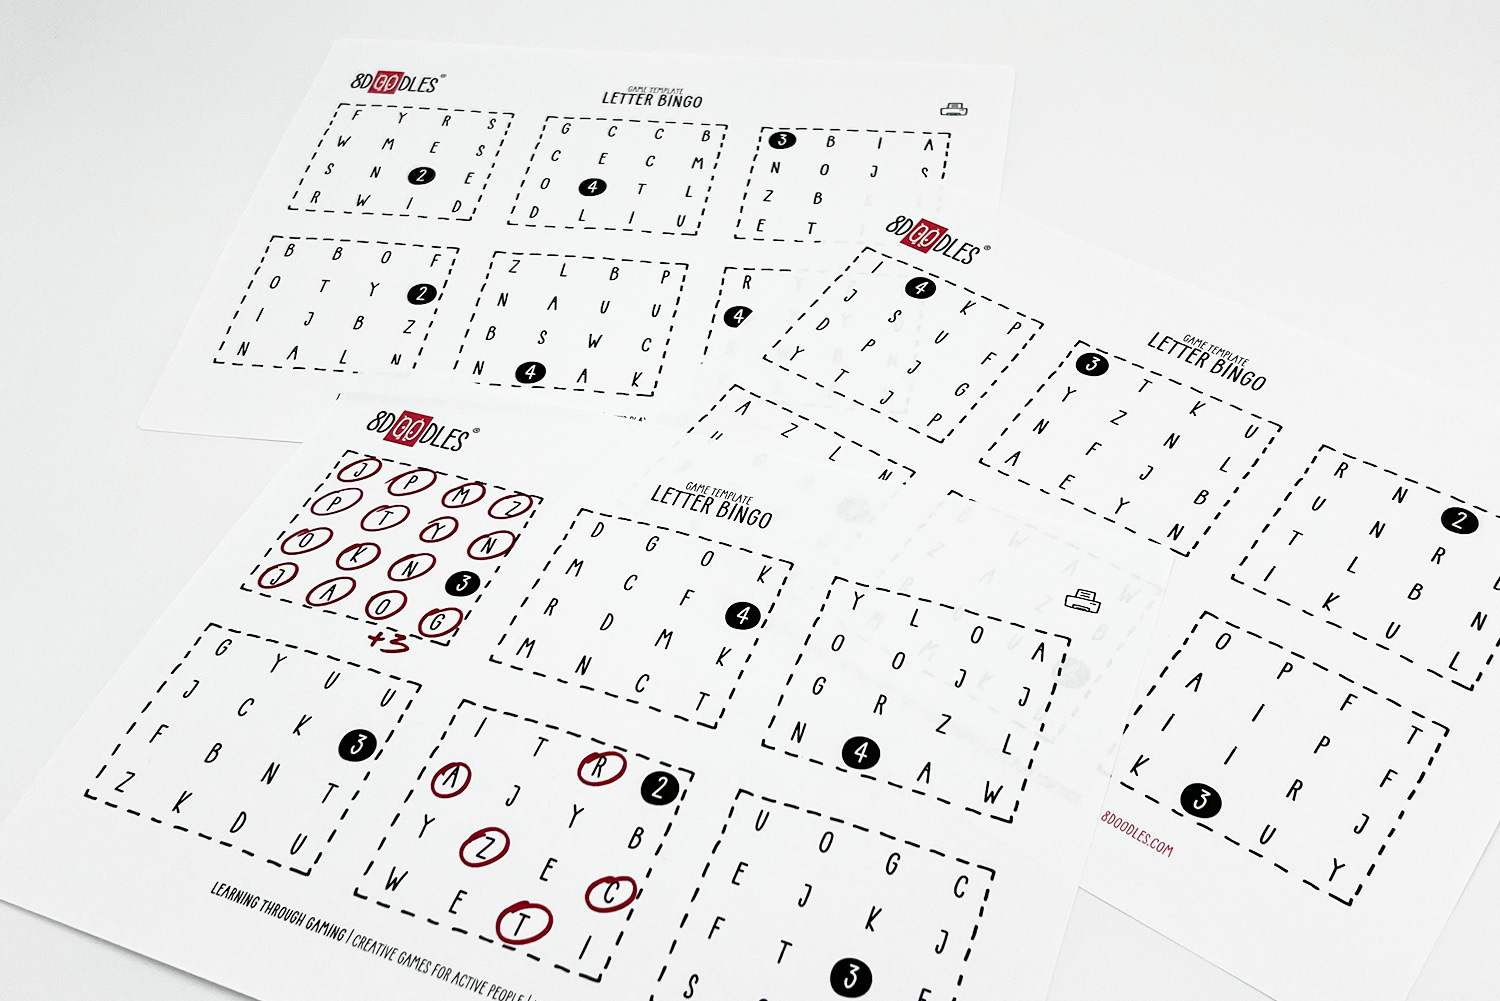 info-box-letter-bingo-puzzle-and-logic-game